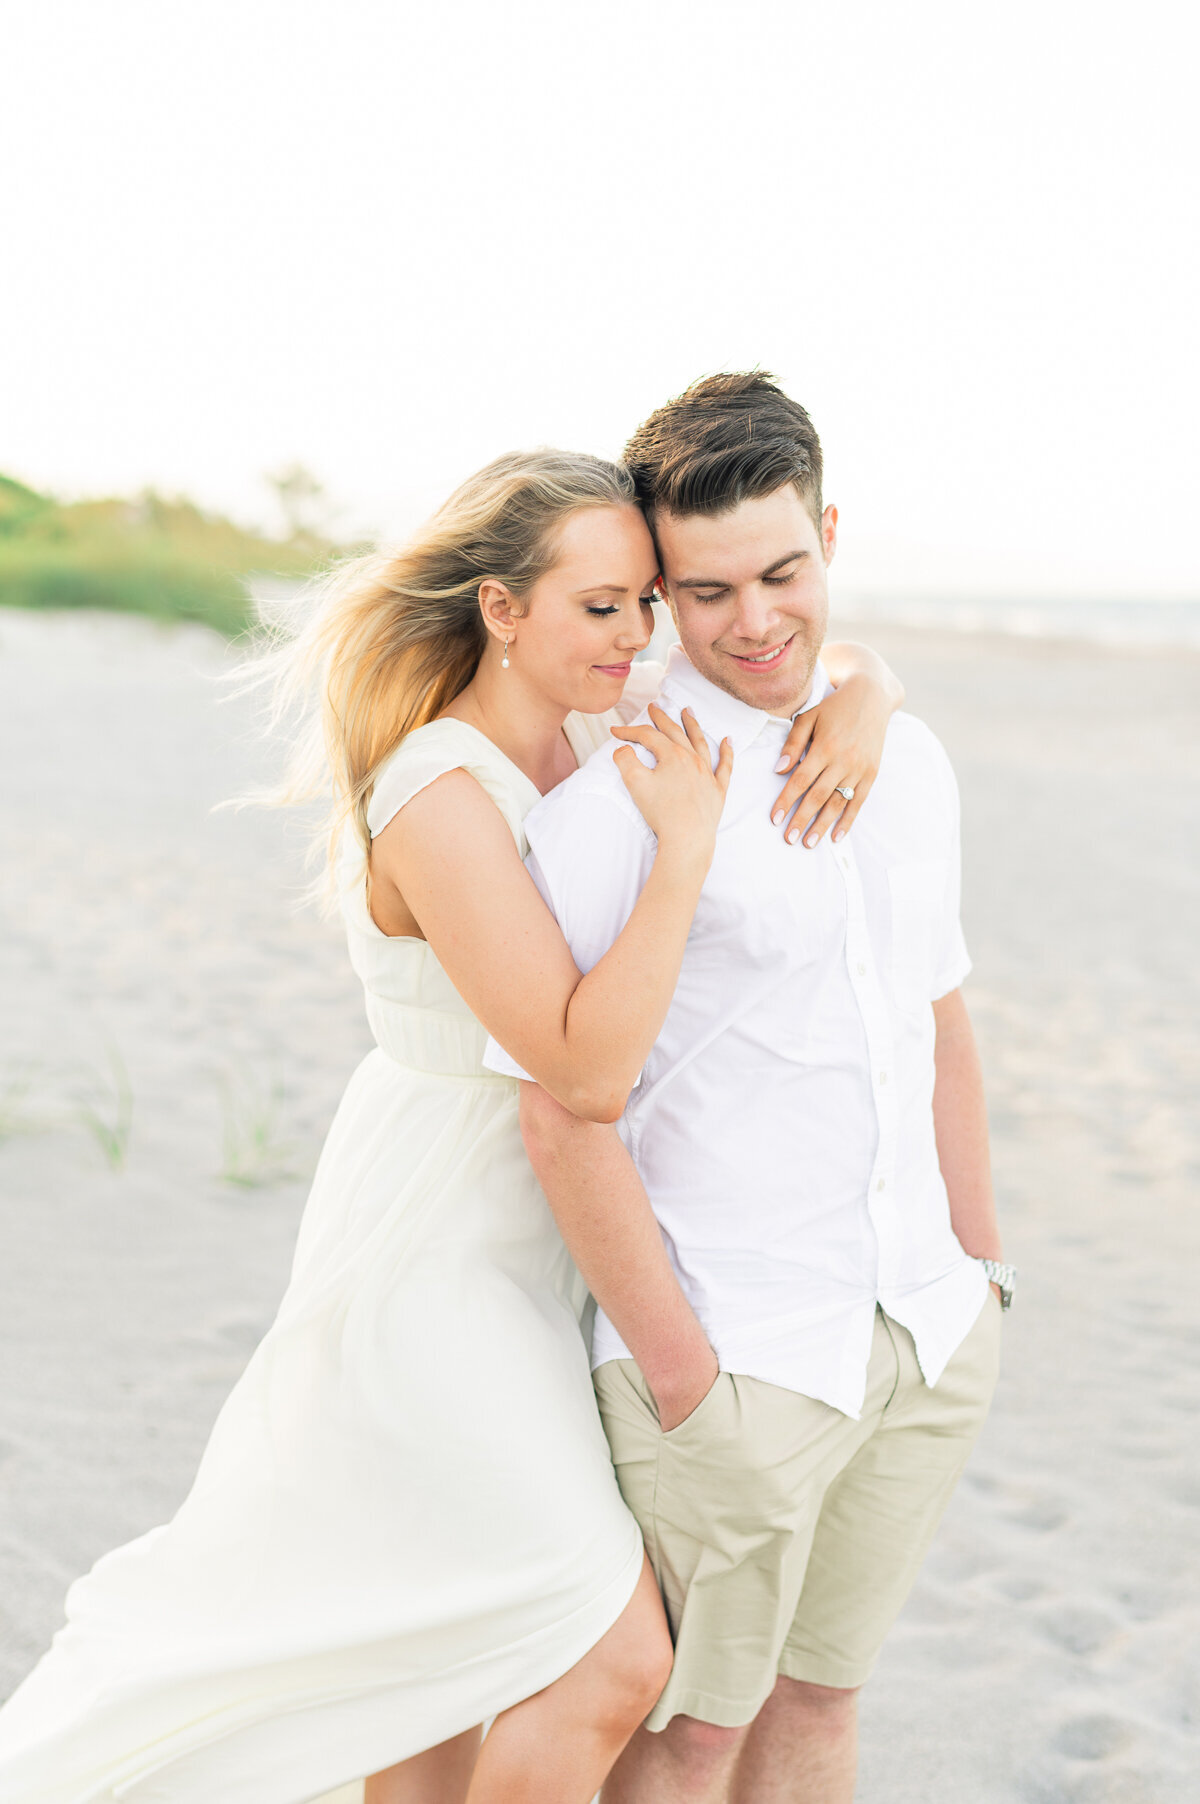 Sarah & Kevin Melbourne Beach Florida Engagement | Lisa Marshall Photography 2